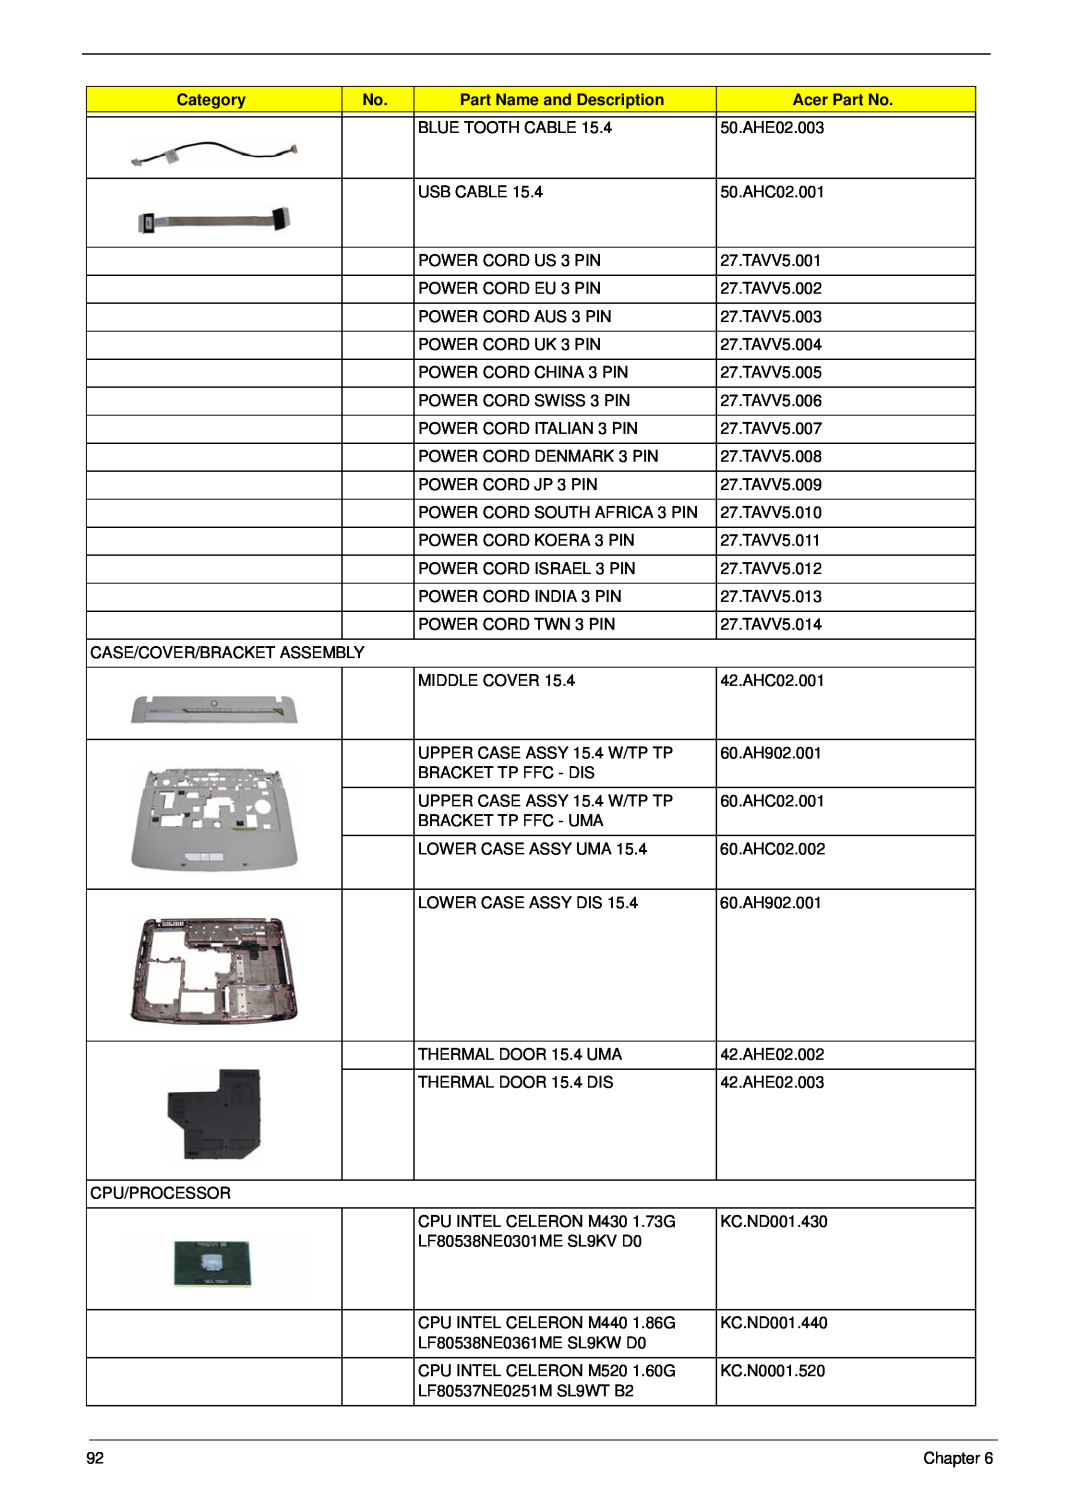 Acer 5310G, 5710G manual Category, Part Name and Description, Acer Part No 